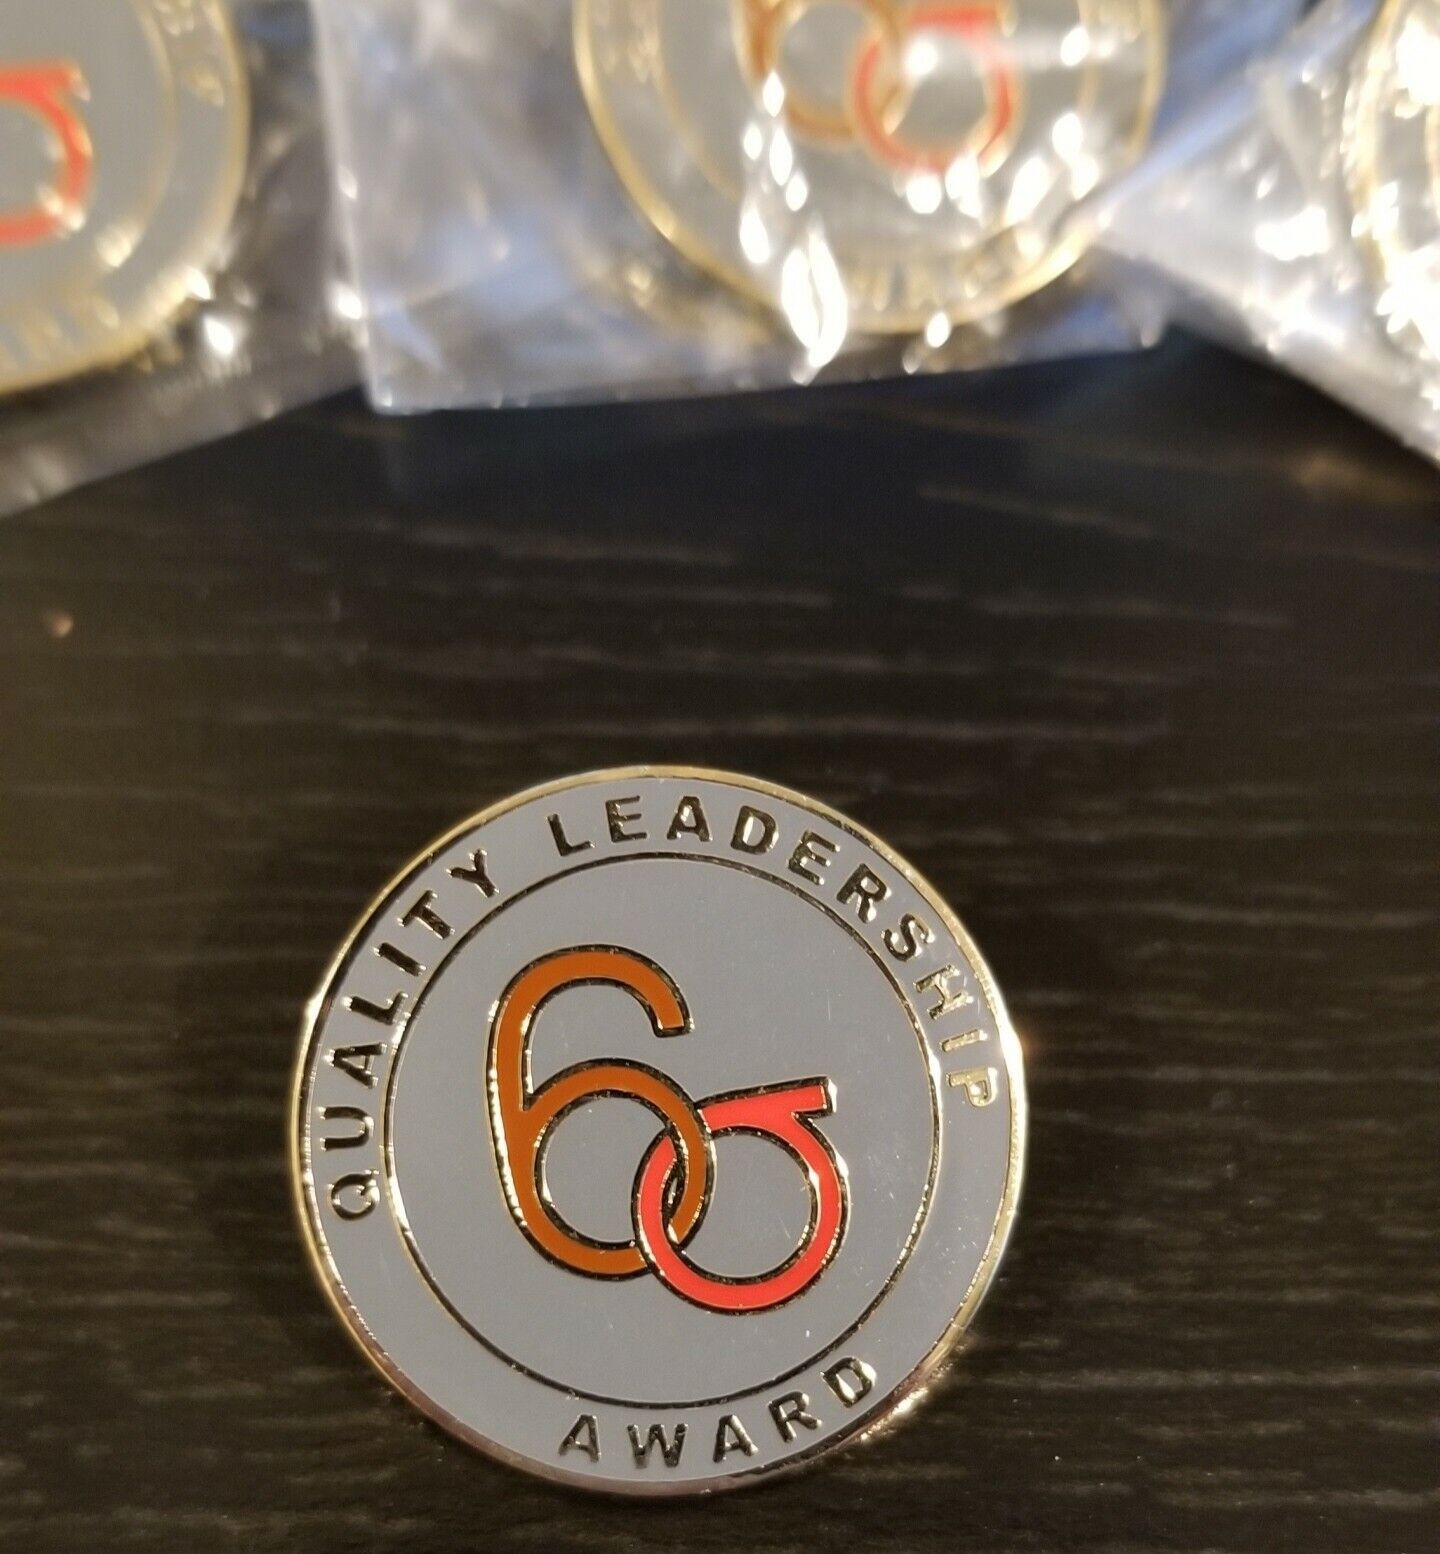 Lot of 5 Six Sigma Quality Leadership Award clutch lapel pins - 6 Sigma Без бренда